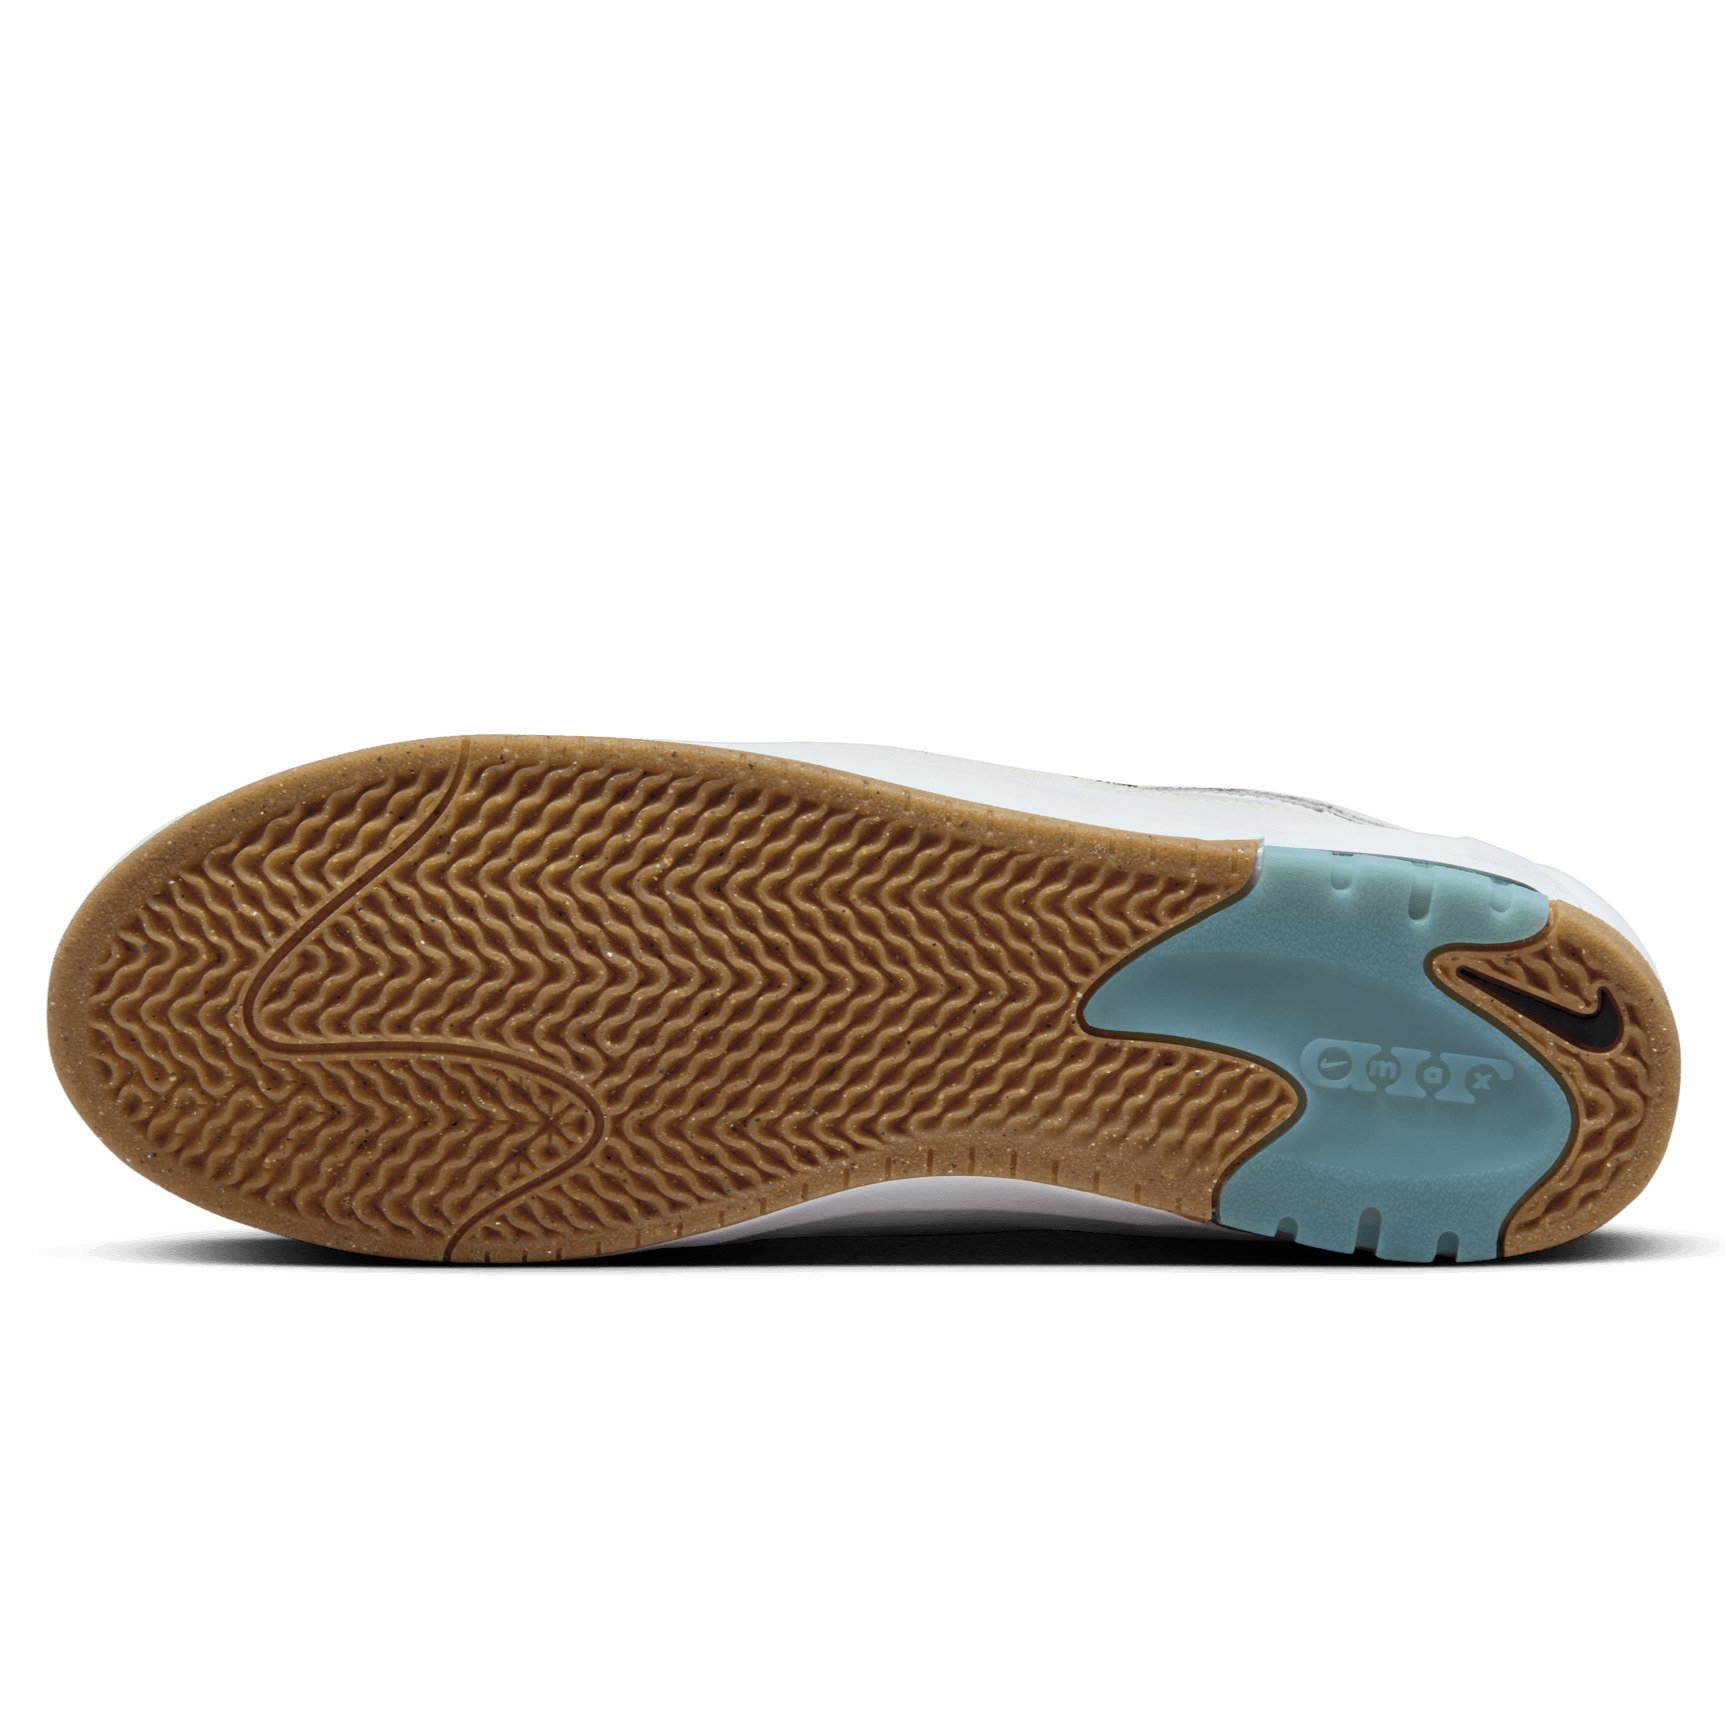 White/Navy Air Max Ishod 2 Nike SB Skate Shoe Bottom